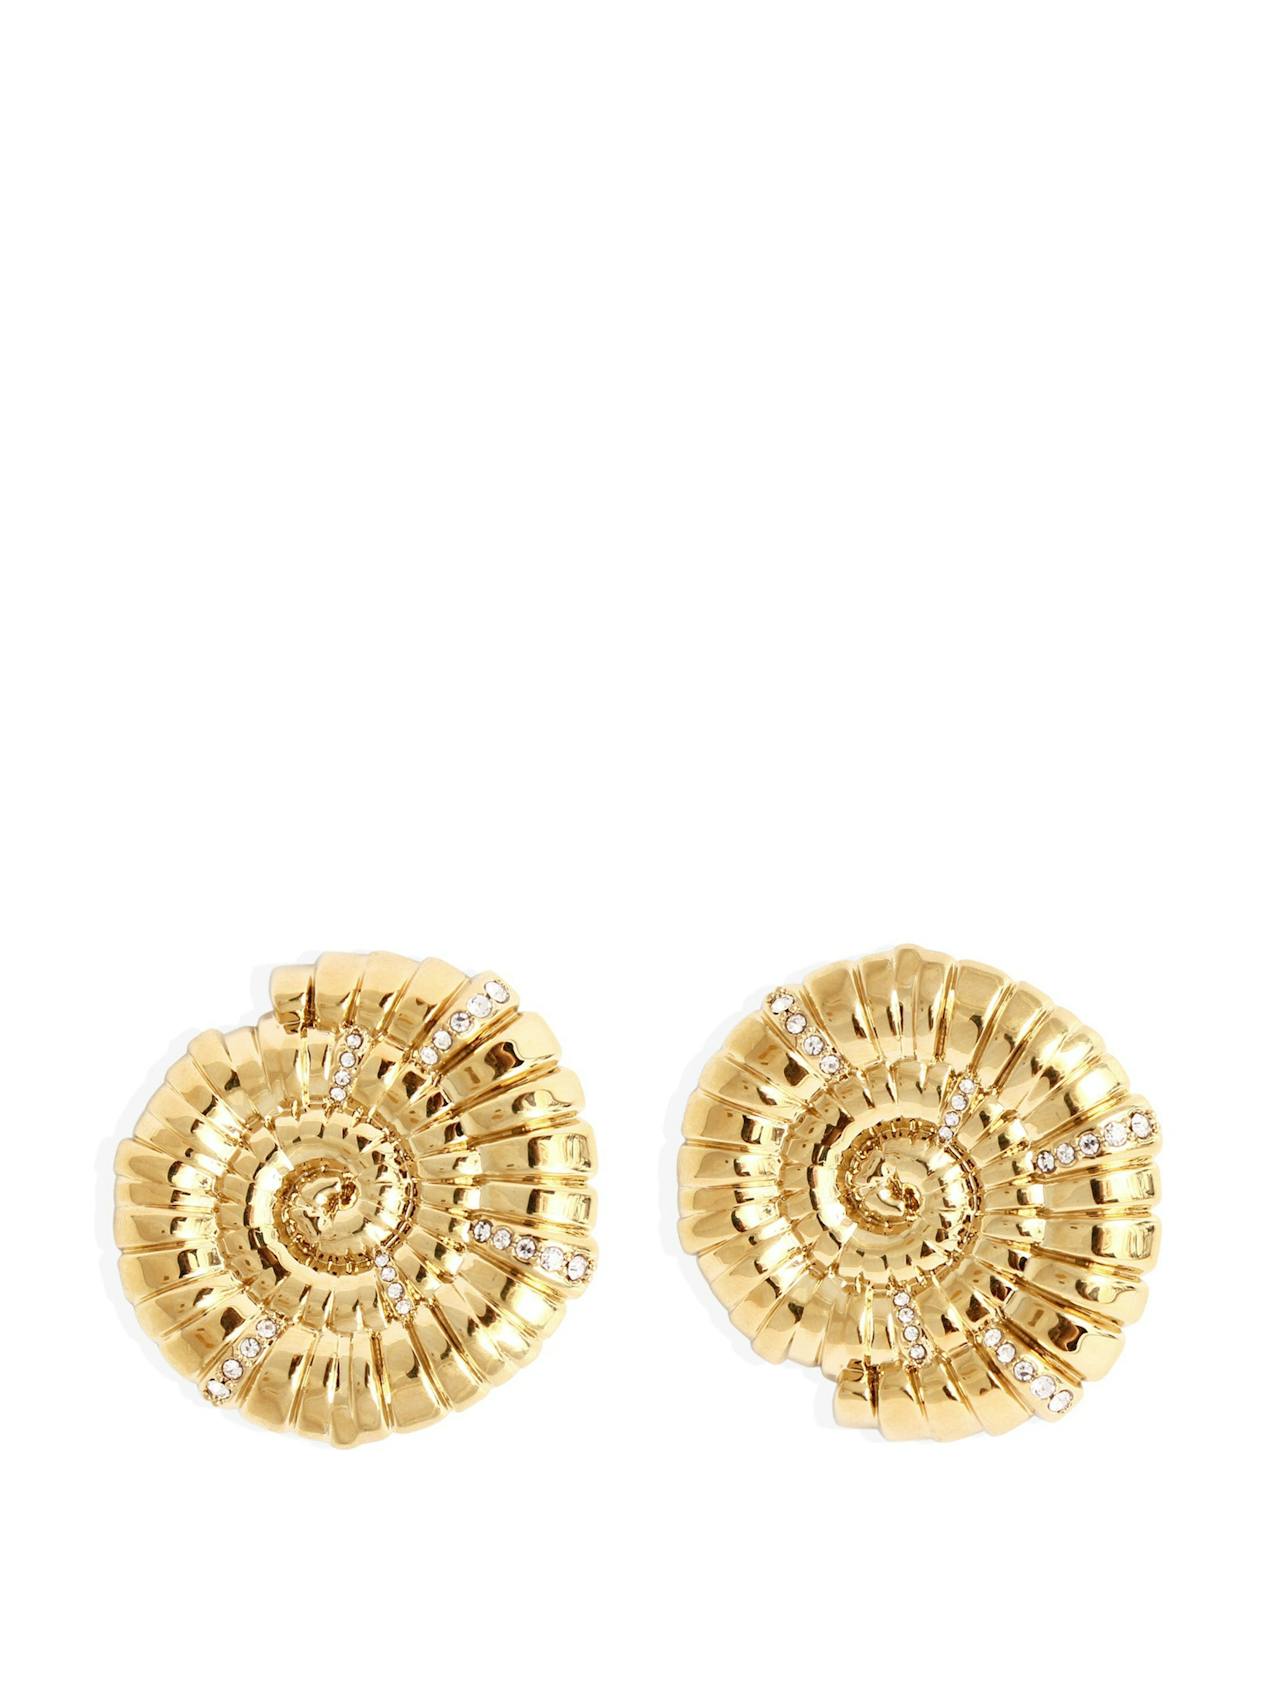 Large gold Galia earrings